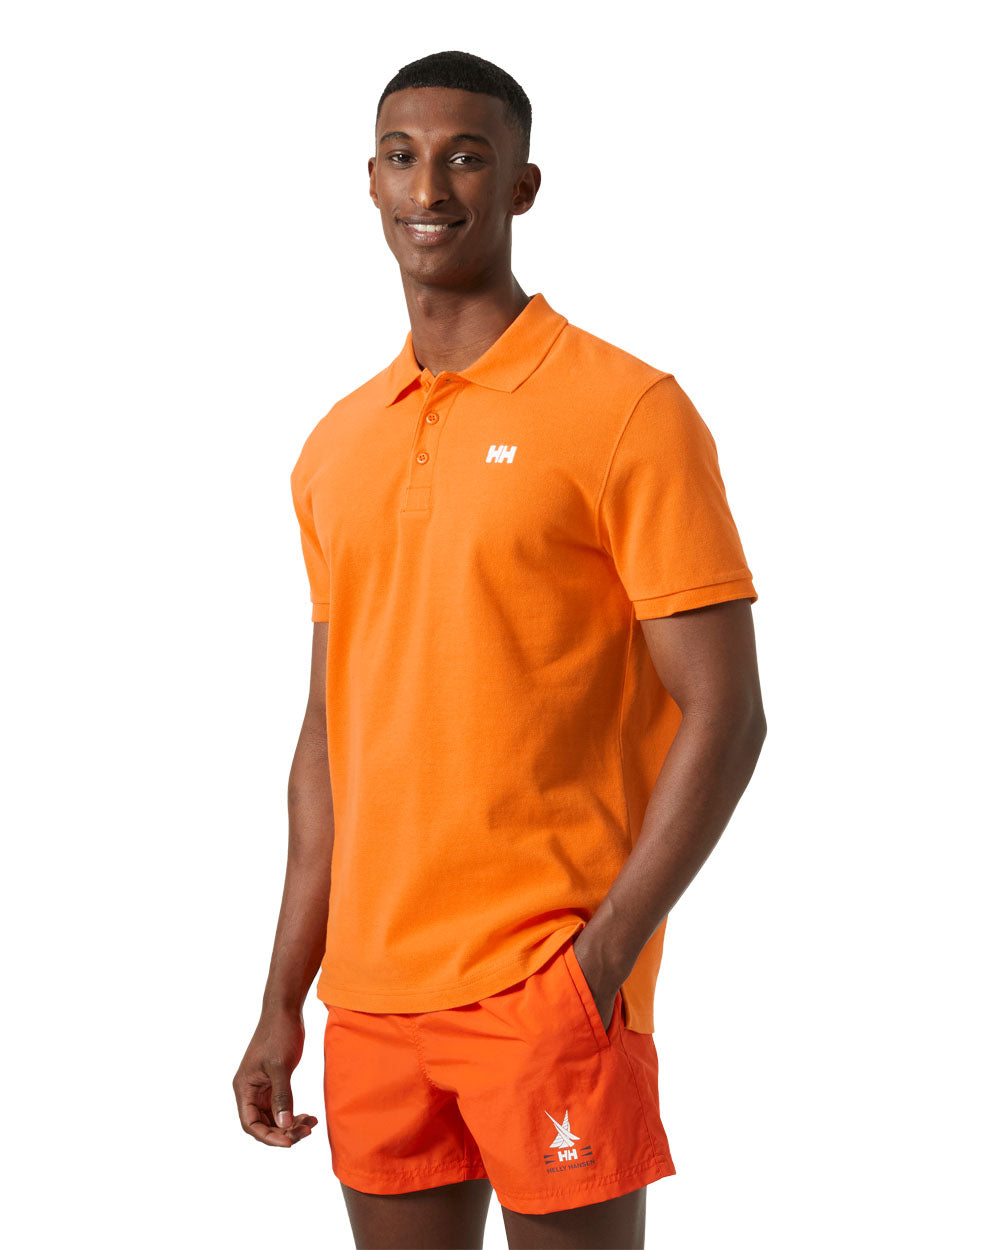 Poppy Orange coloured Helly Hansen Polo Shirt on White background 